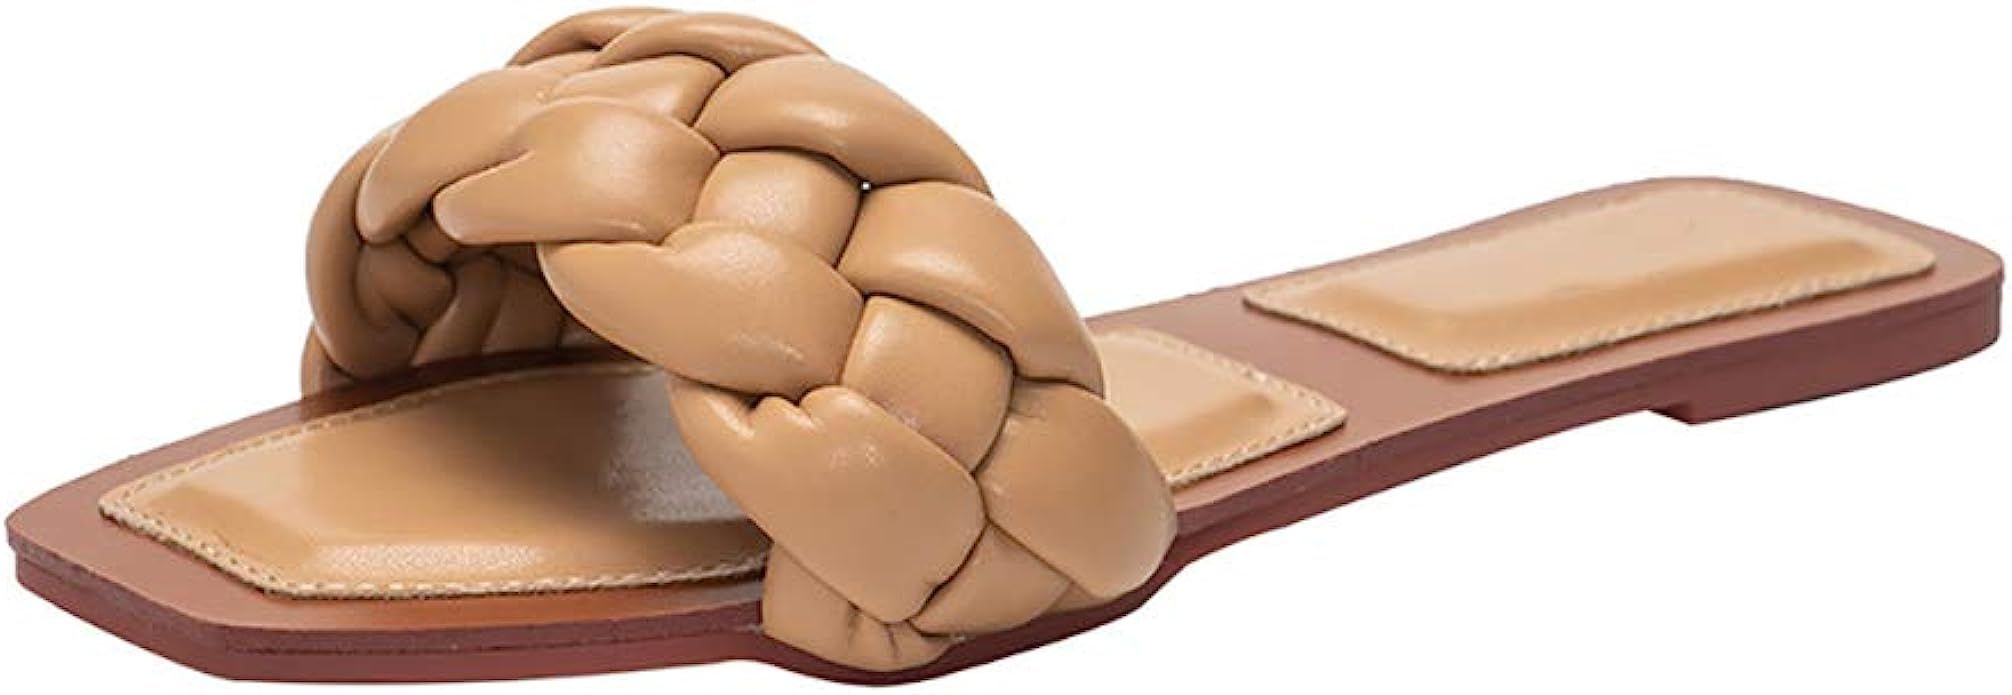 depdream Women's Open Square Toe Flat Sandals Slip On Mule Slipper Casual Shoes | Amazon (US)